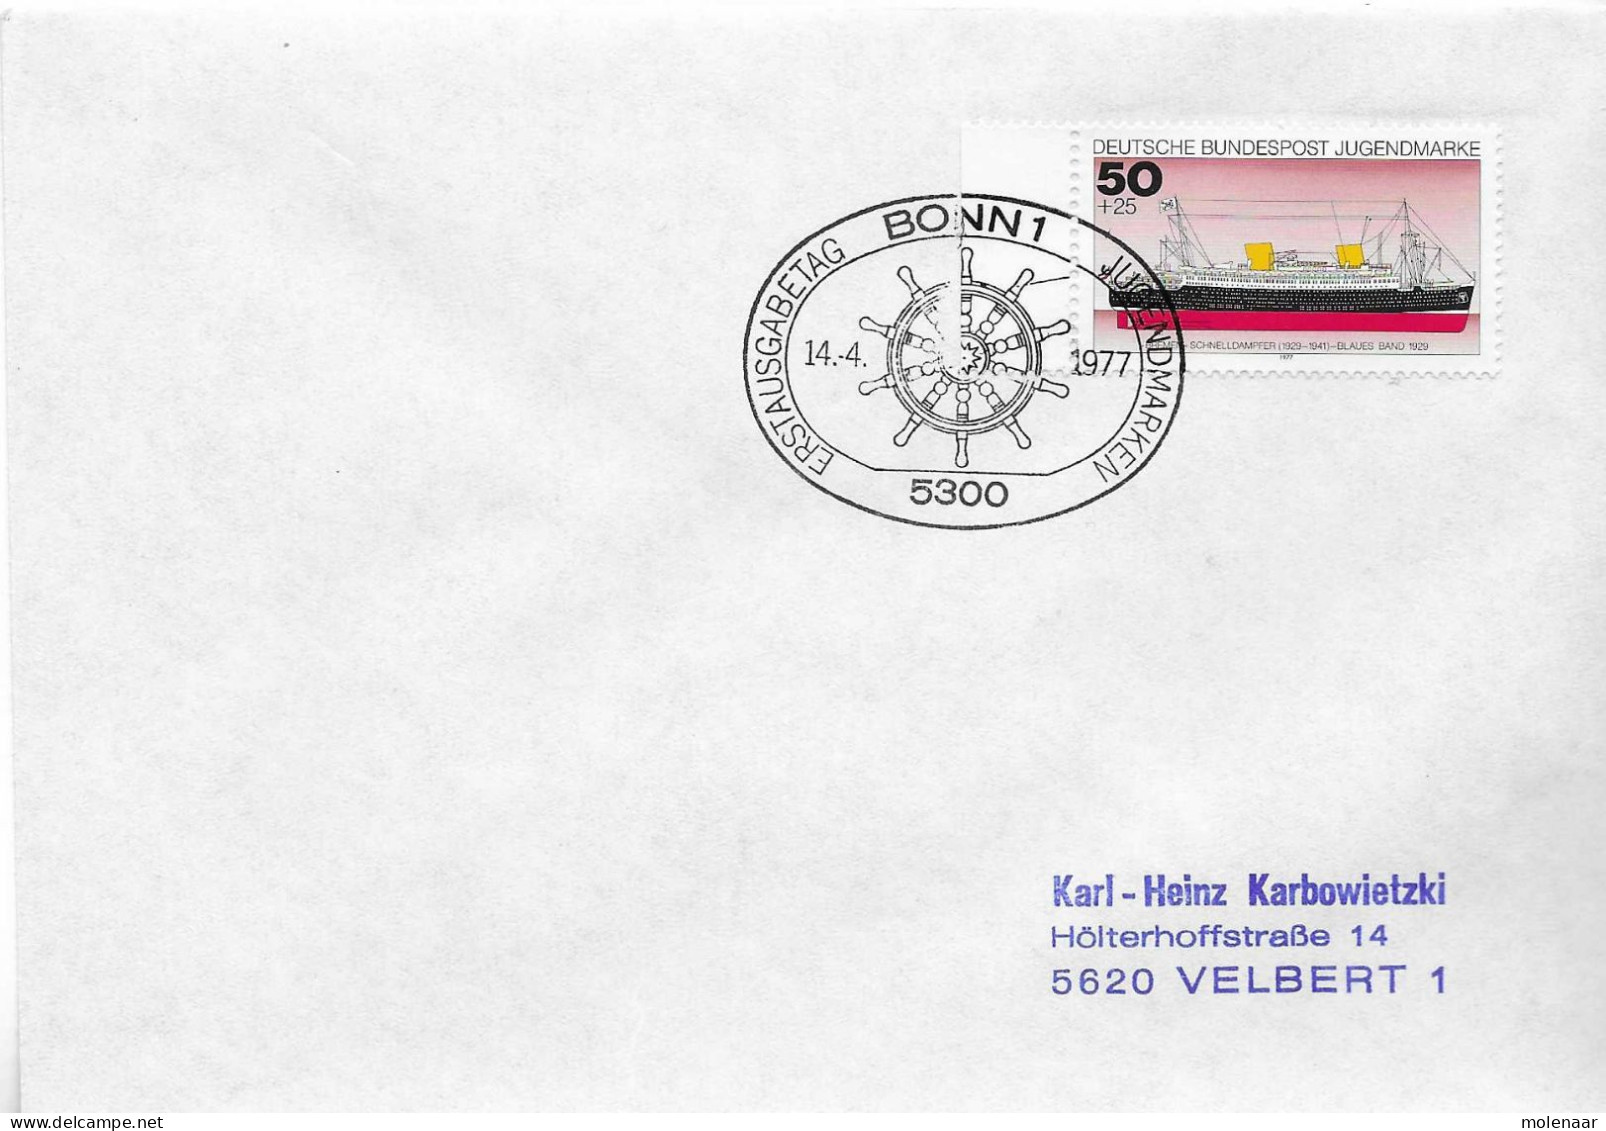 Postzegels > Europa > Duitsland > West-Duitsland > 1970-1979 > Brief Met No. 929 (17364) - Covers & Documents